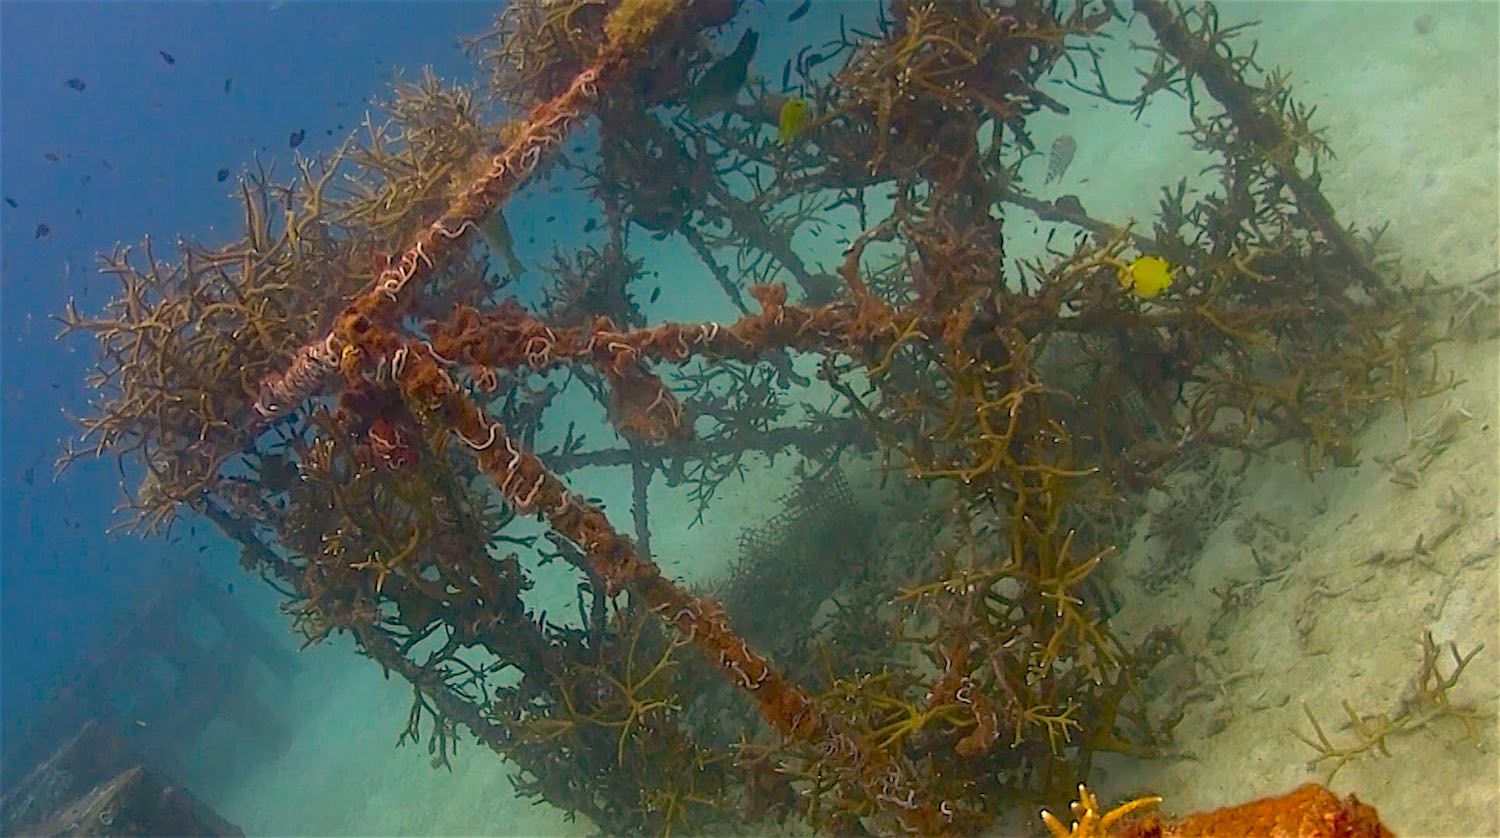 www.thefunkyturtle.com Buoyancy world coral restoration project dive site koh tao